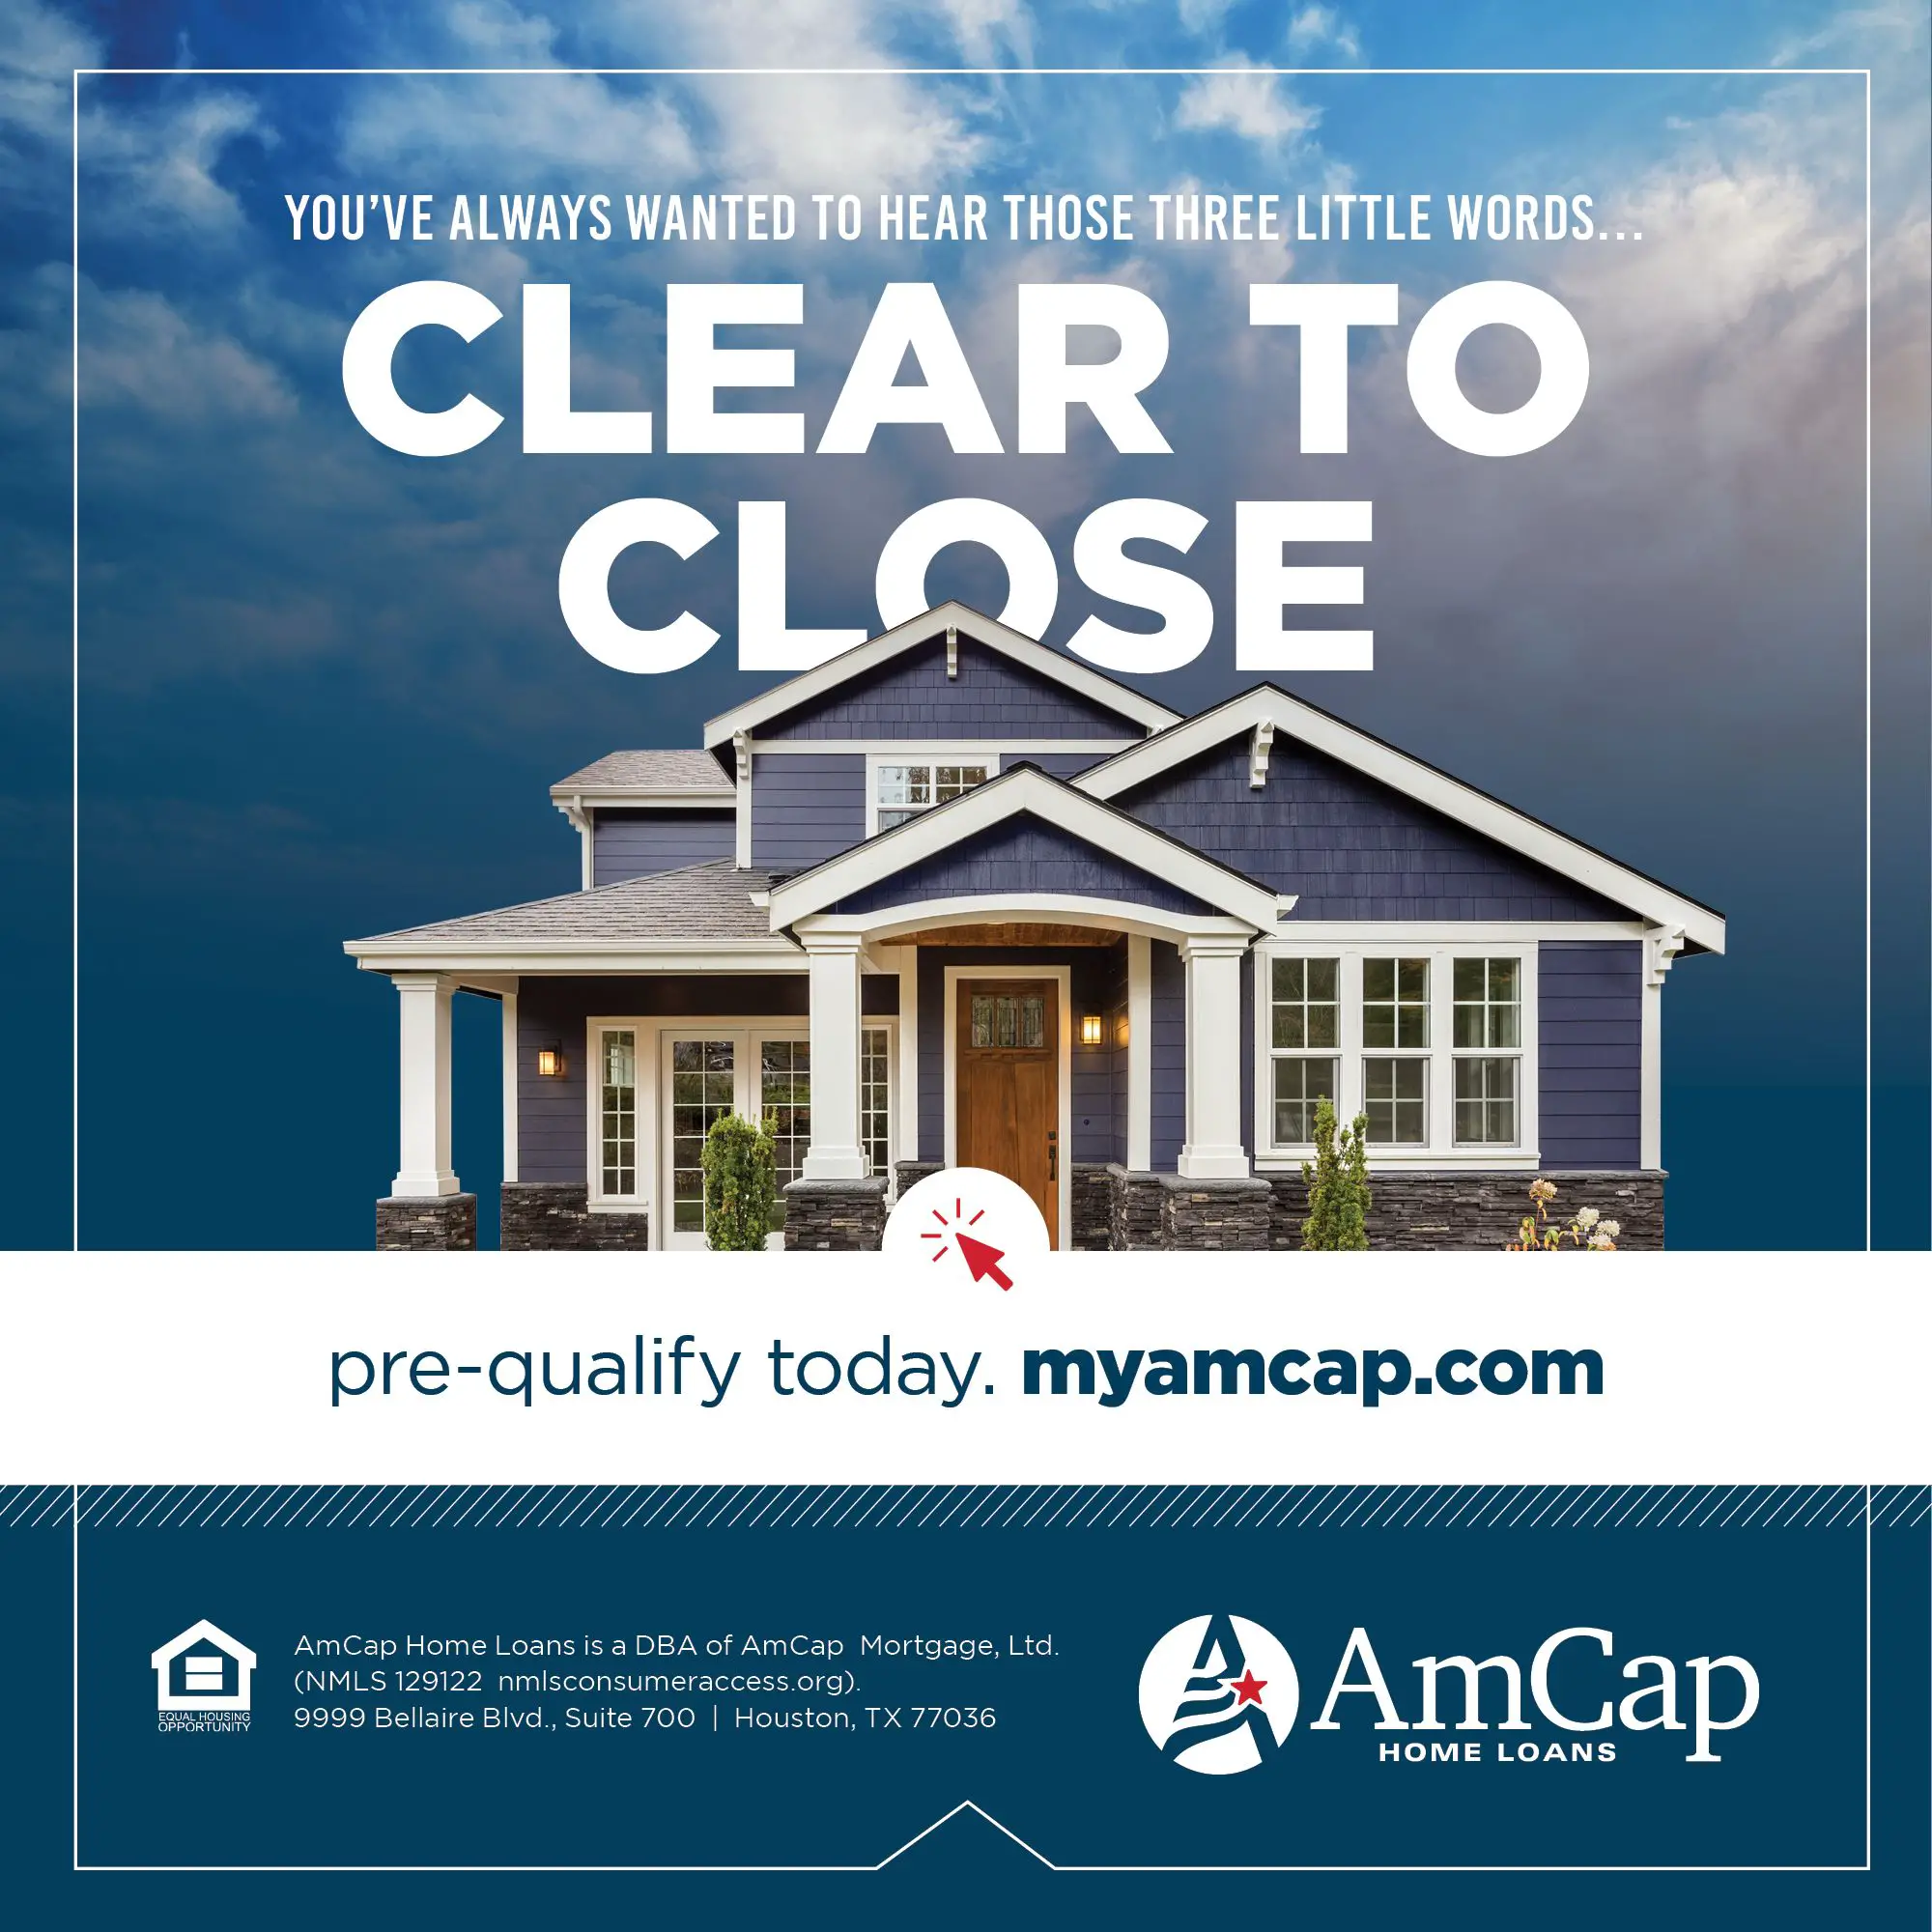 Pin on AmCap Home Loans